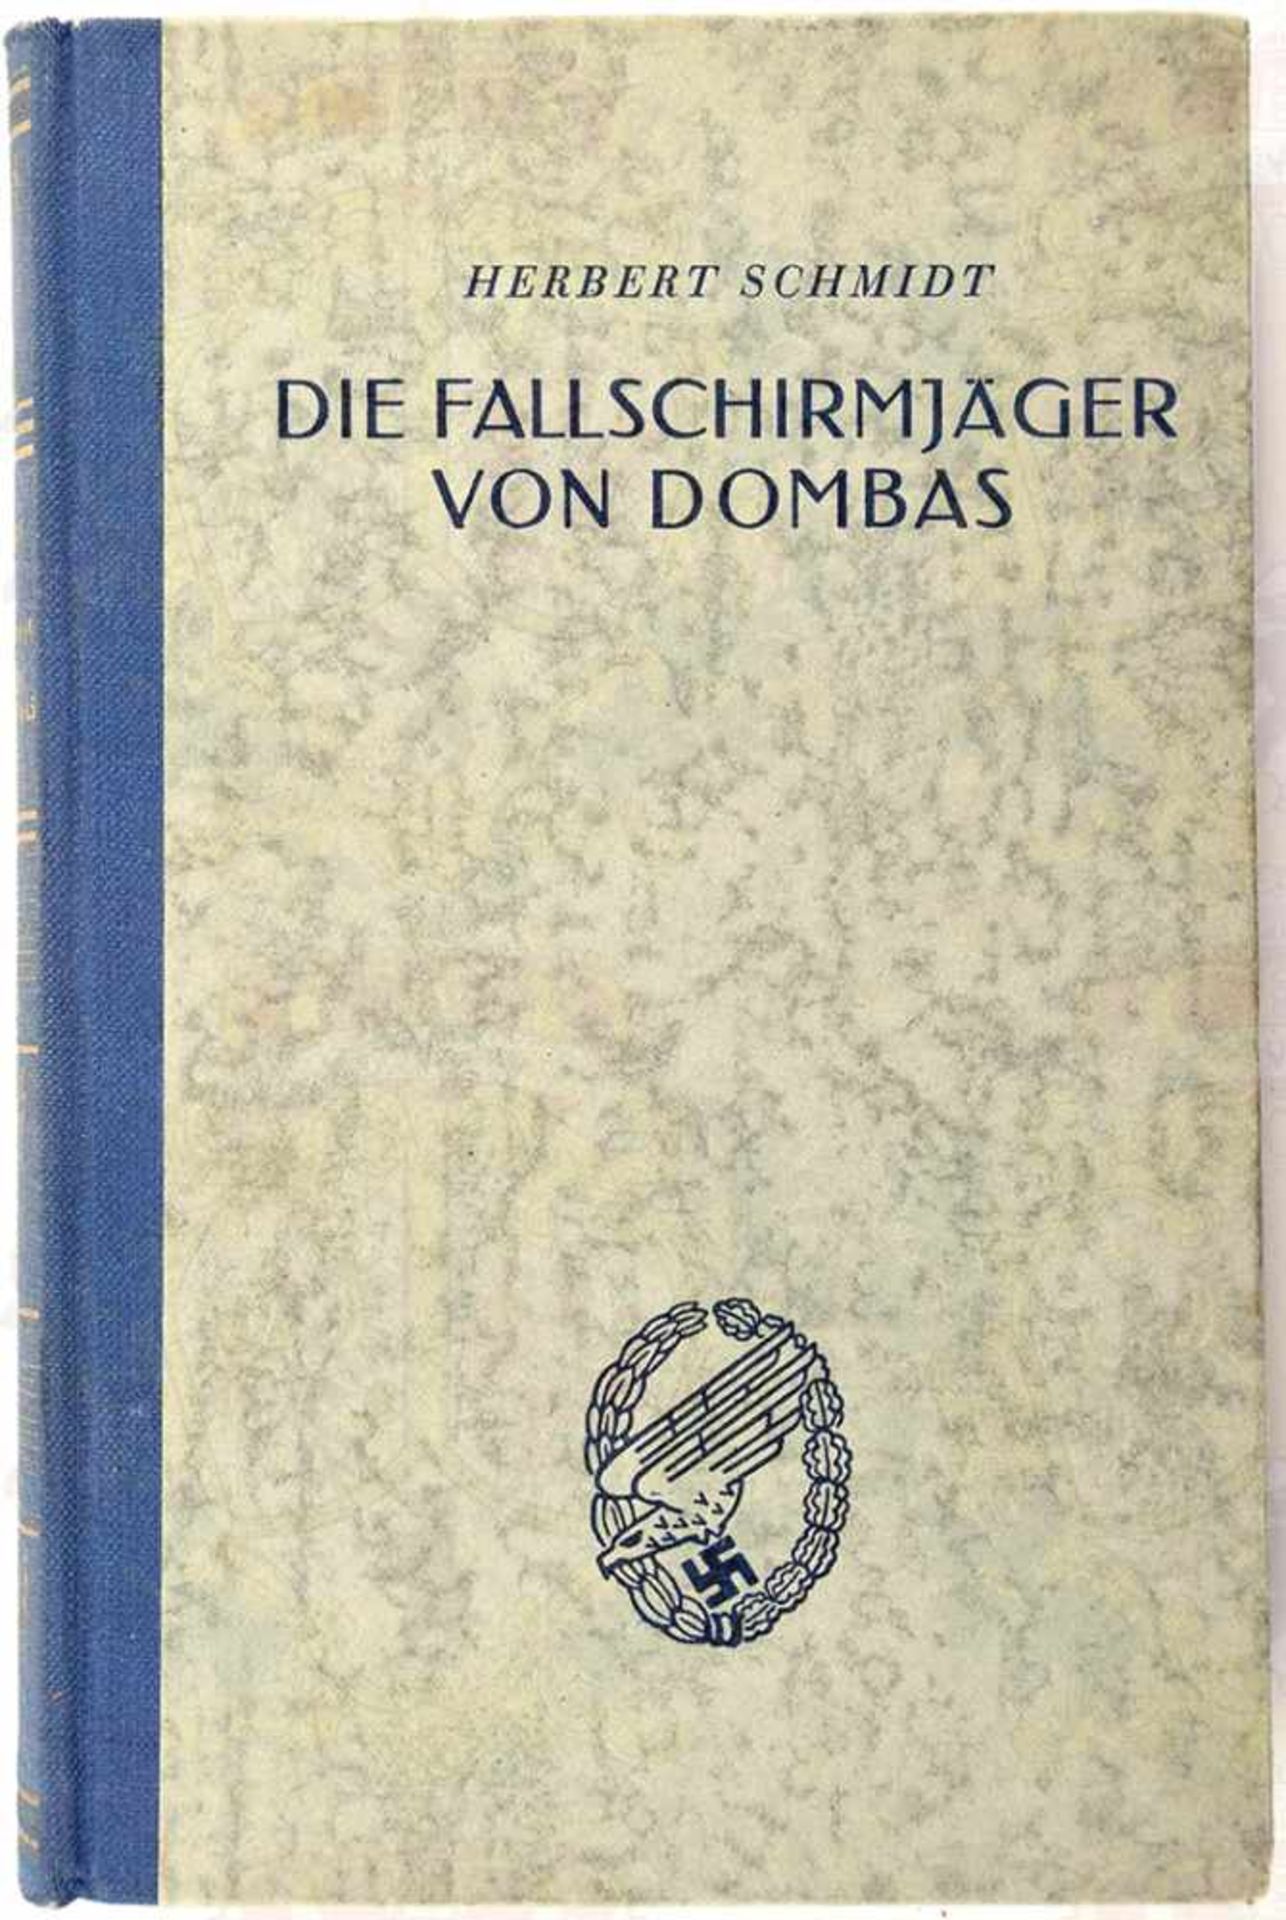 DIE FALLSCHIRMJÄGER VON DOMBAS, Hptm. i. e. Fallschirmjäger-Rgt. H. Schmidt, Bln. 1941, m. 48 Fotos,